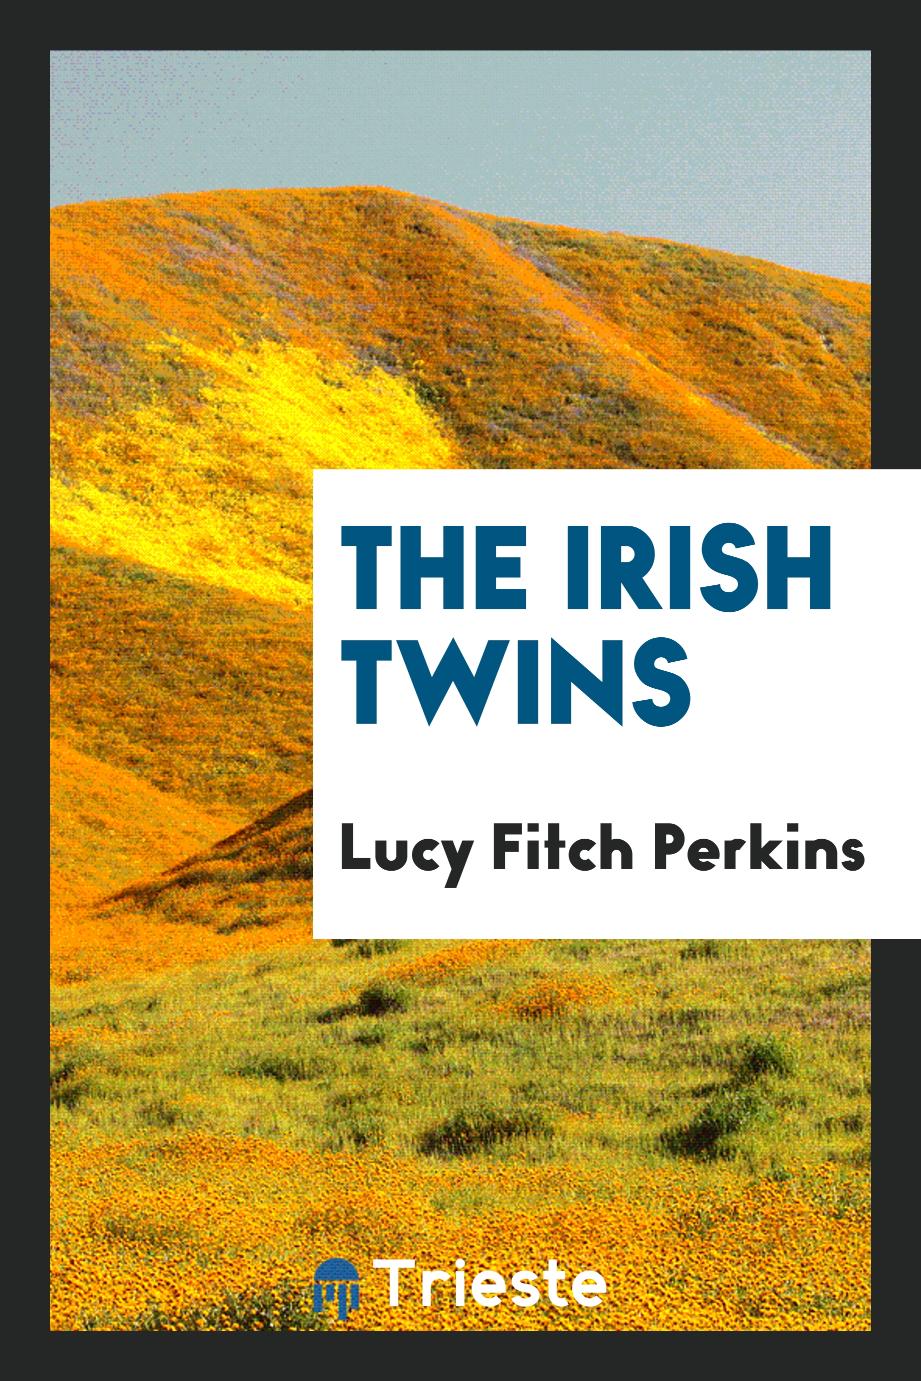 The Irish twins